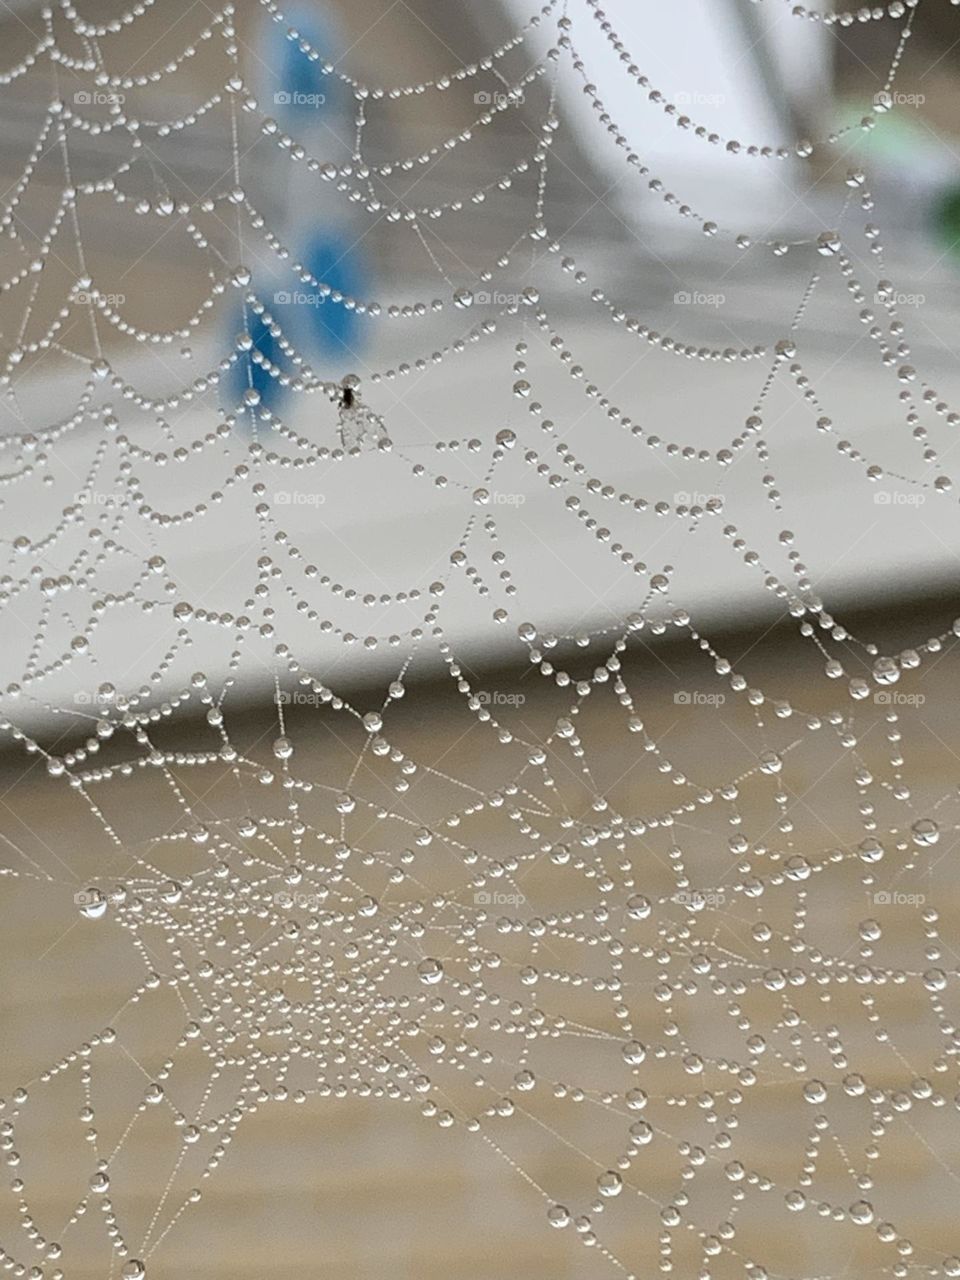 Spiderweb on a rainy day 